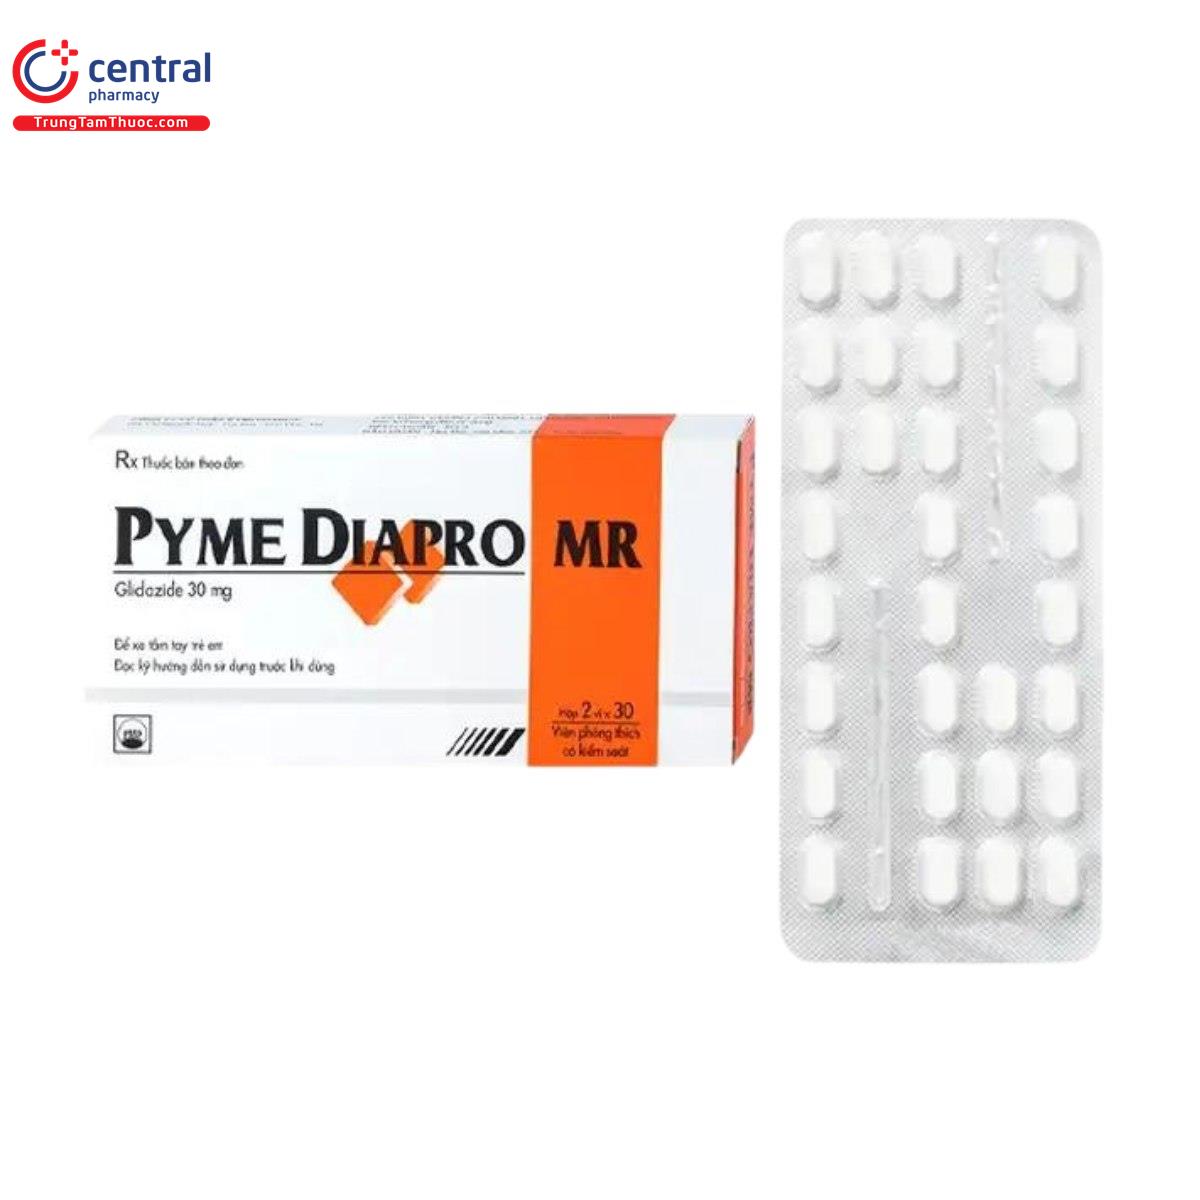 pyme diapro mr 30mg 2 D1260